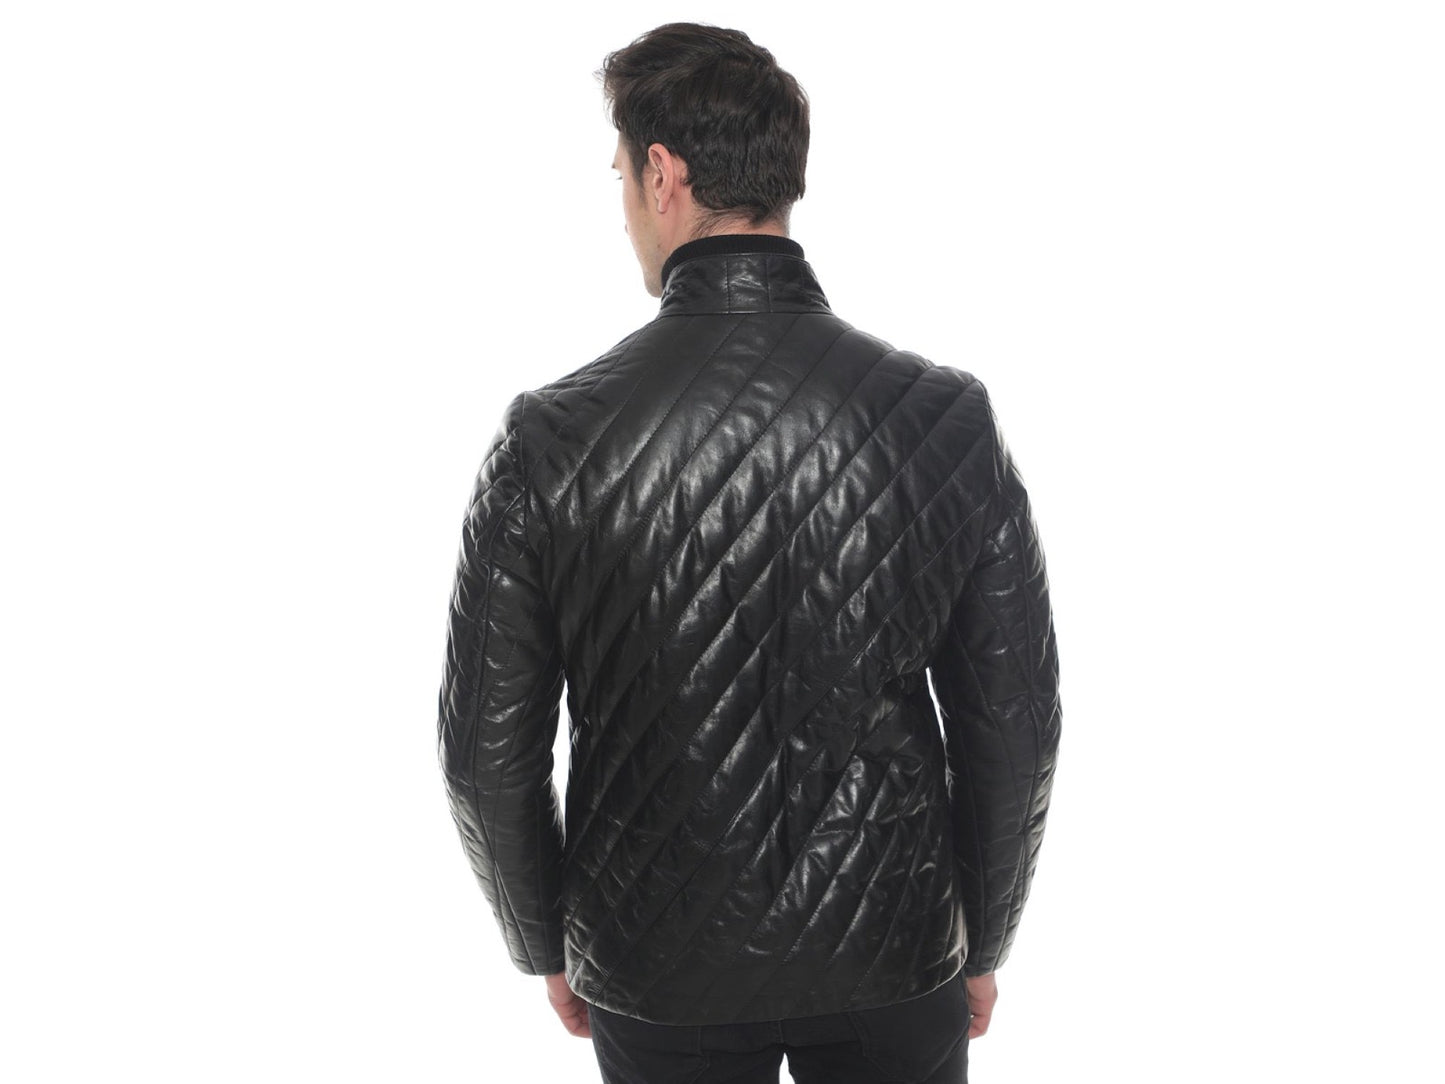 Matrix Quilted Lamb Leather Jacket – Artisanal Tanning Series